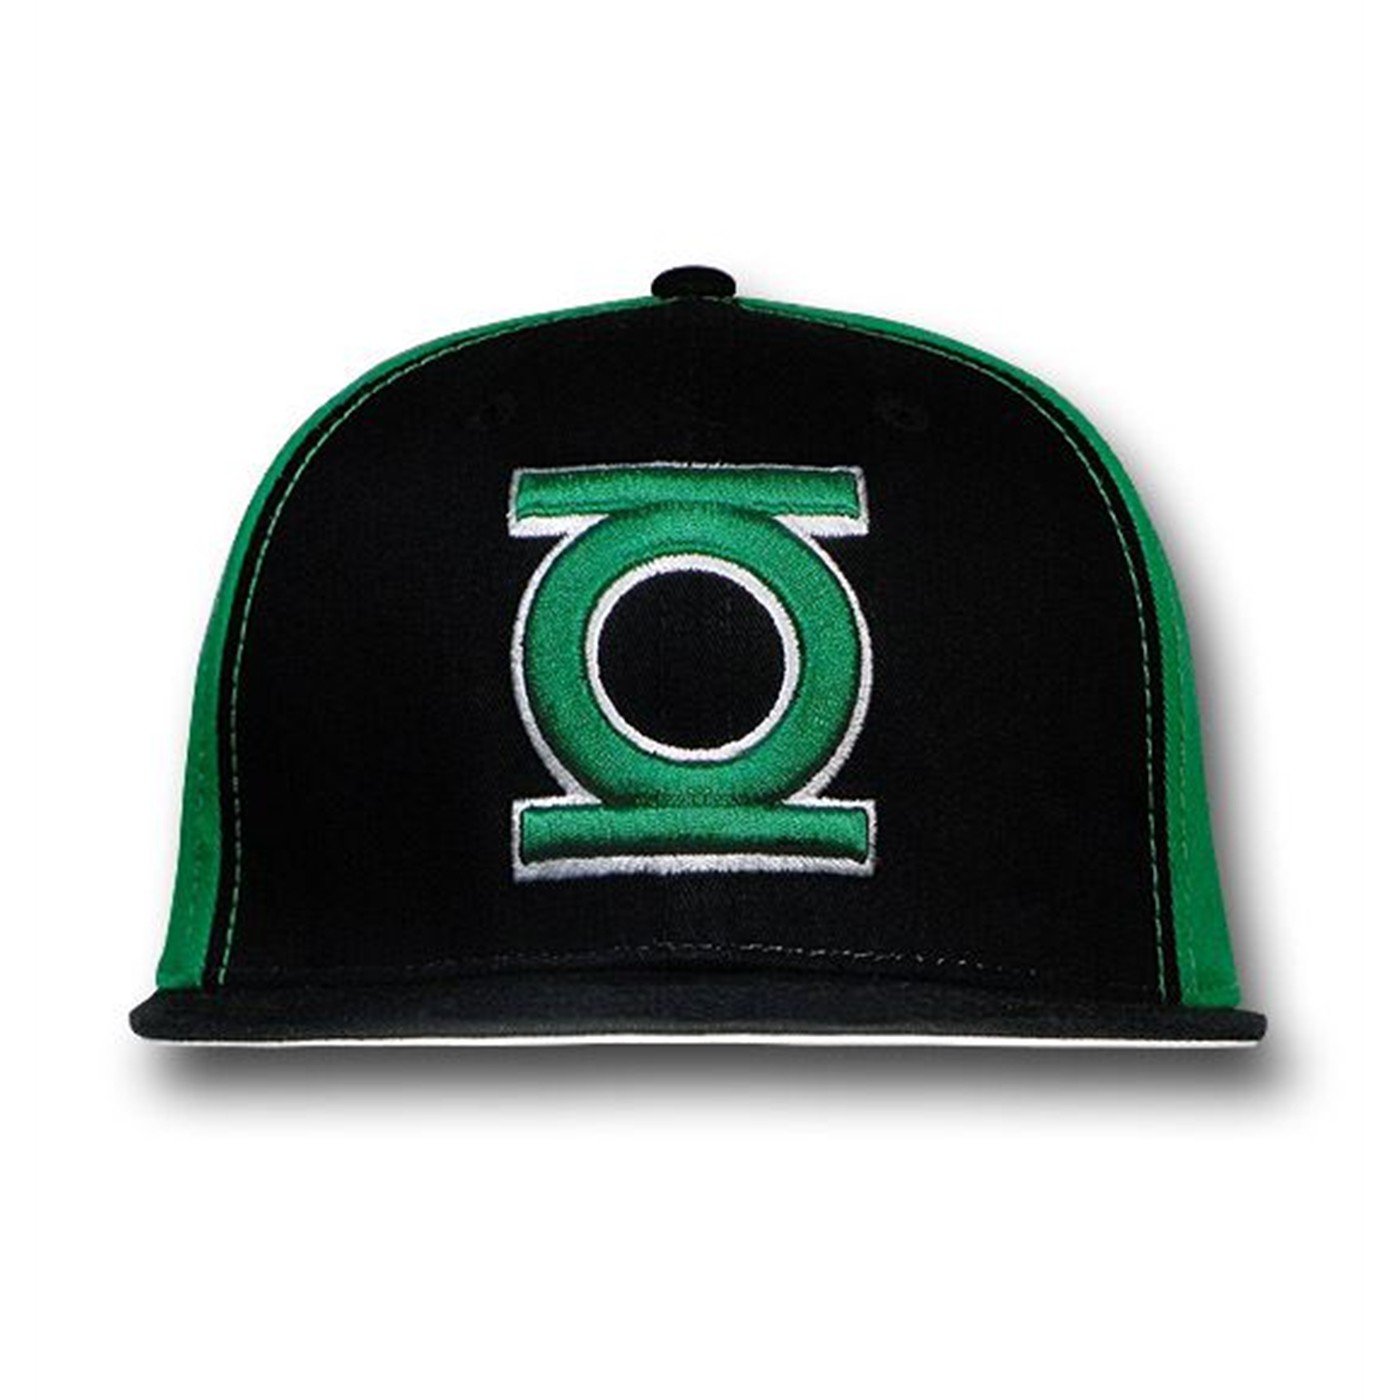 Green Lantern 3D Symbol Black and Green Flat Bill Cap